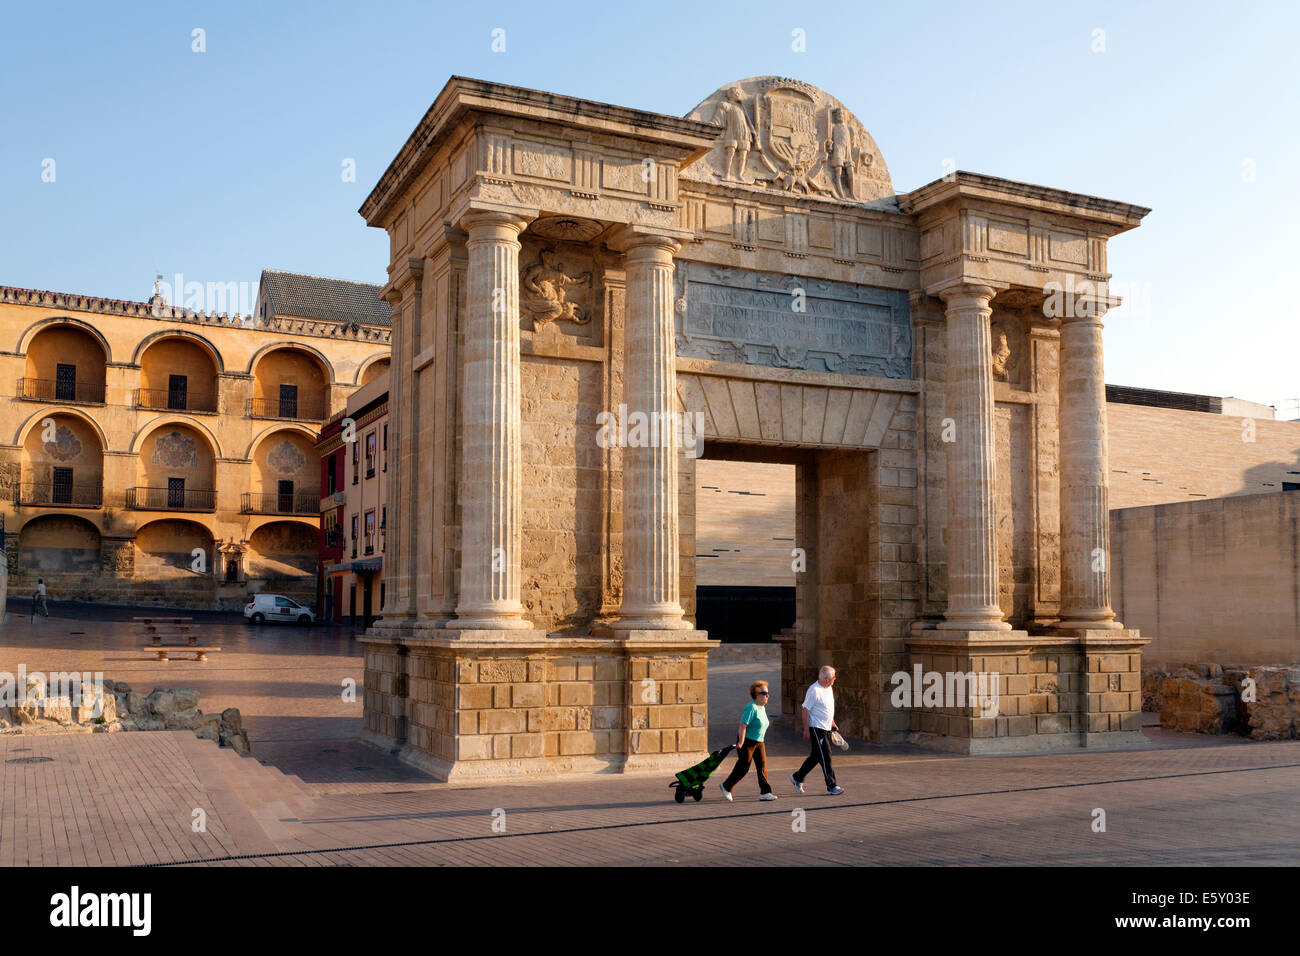 Puerta del Puente / Bridge Gate, Cordoba, Andalusia, Spain Stock Photo